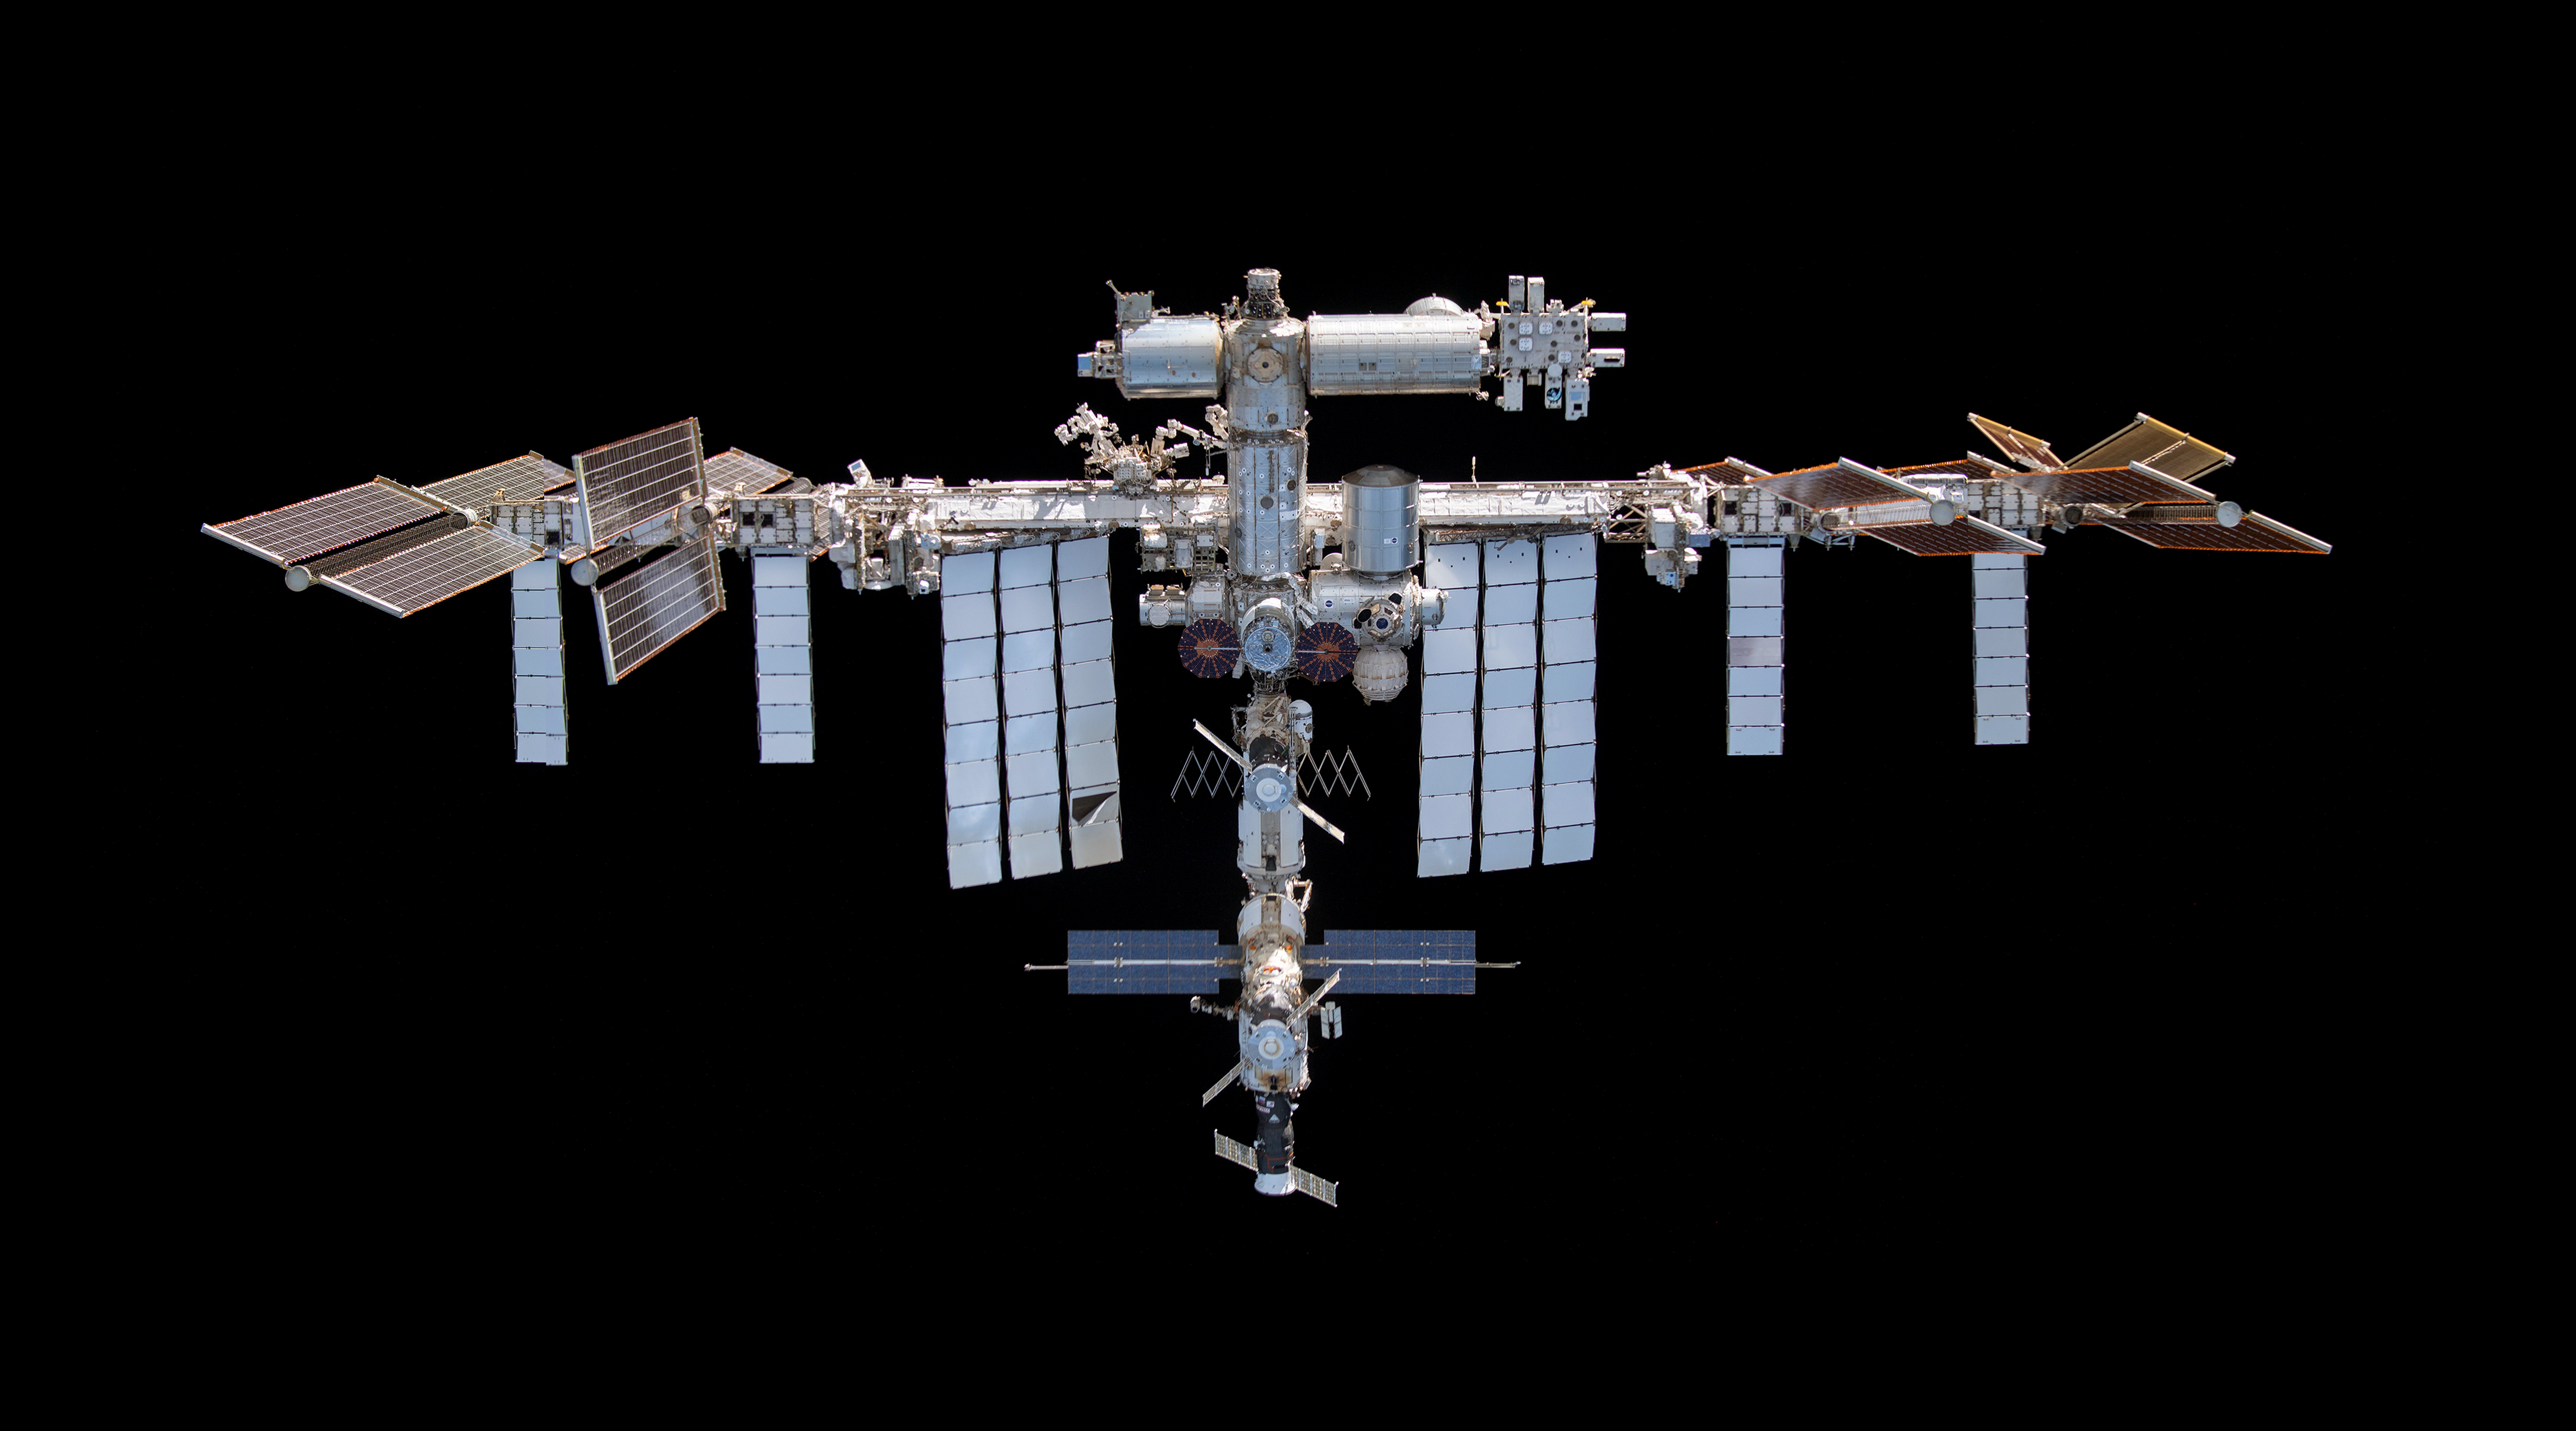 https://www.nasa.gov/wp-content/uploads/2023/02/International-Space-Station-in-2021.jpg